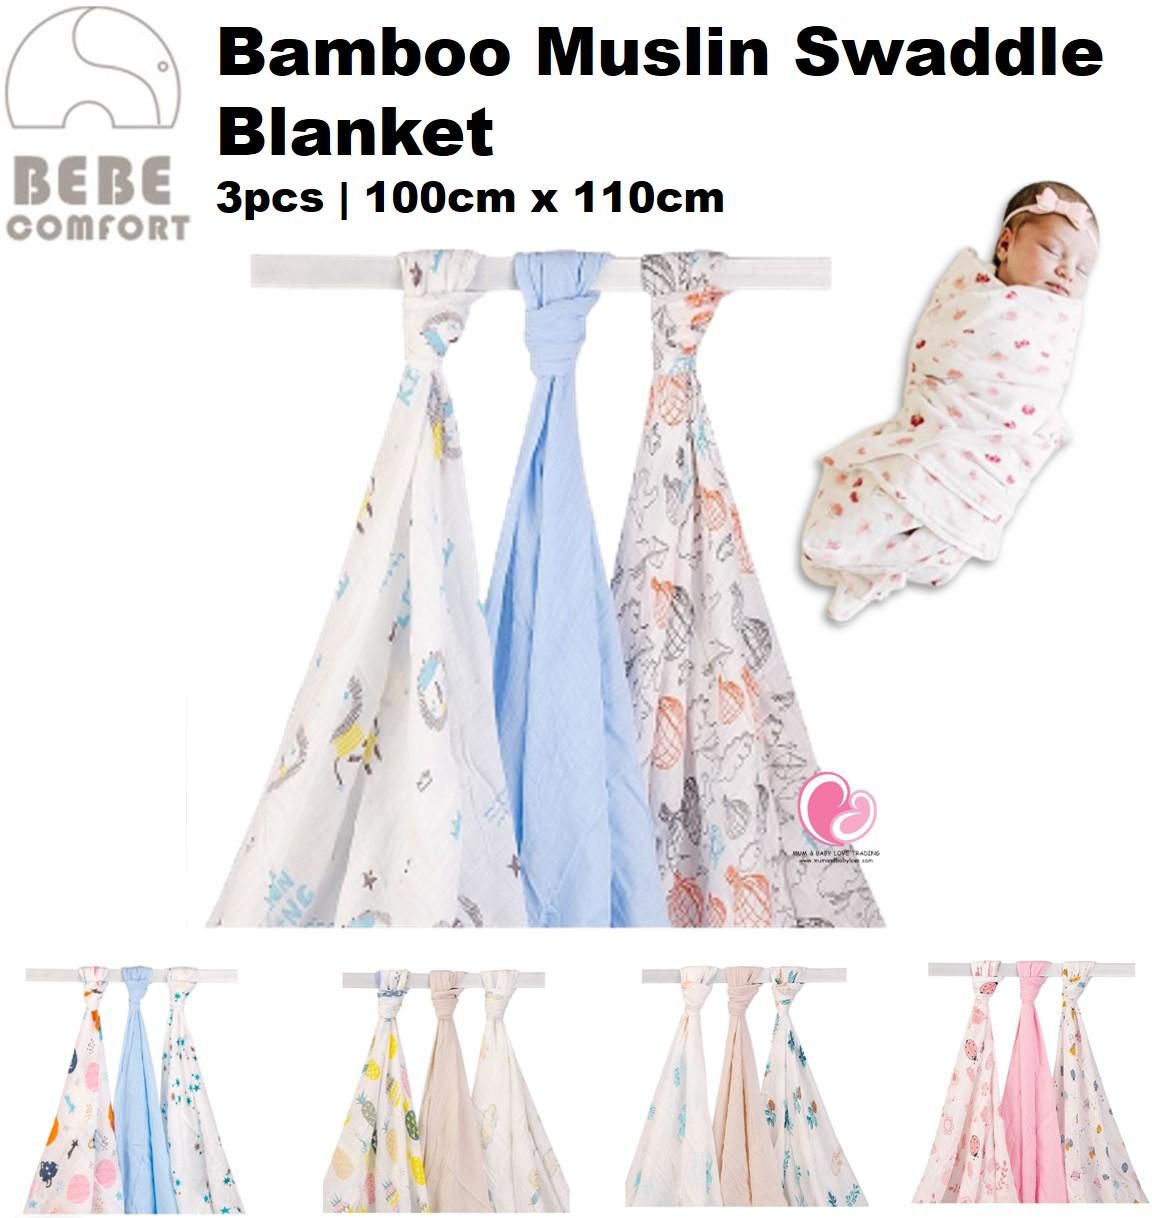 Bebe Comfort 3pcs Bamboo Muslin Swaddle Blanket 110cm x 100cm (5 Options)